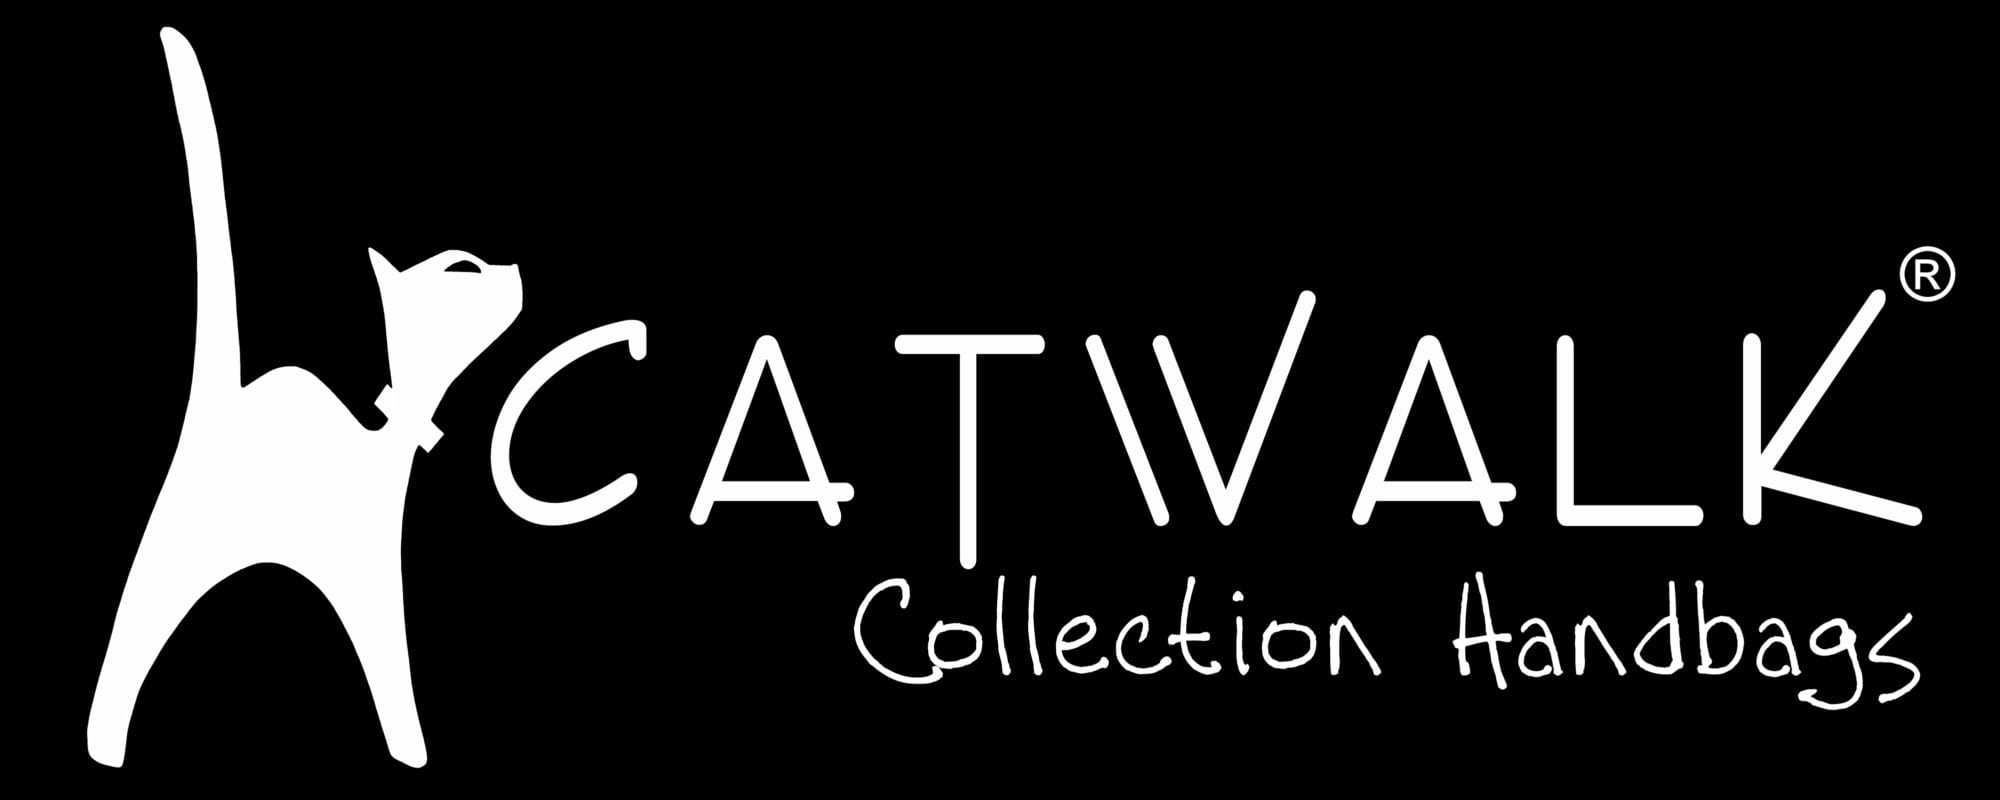 Catwalk collection logo black